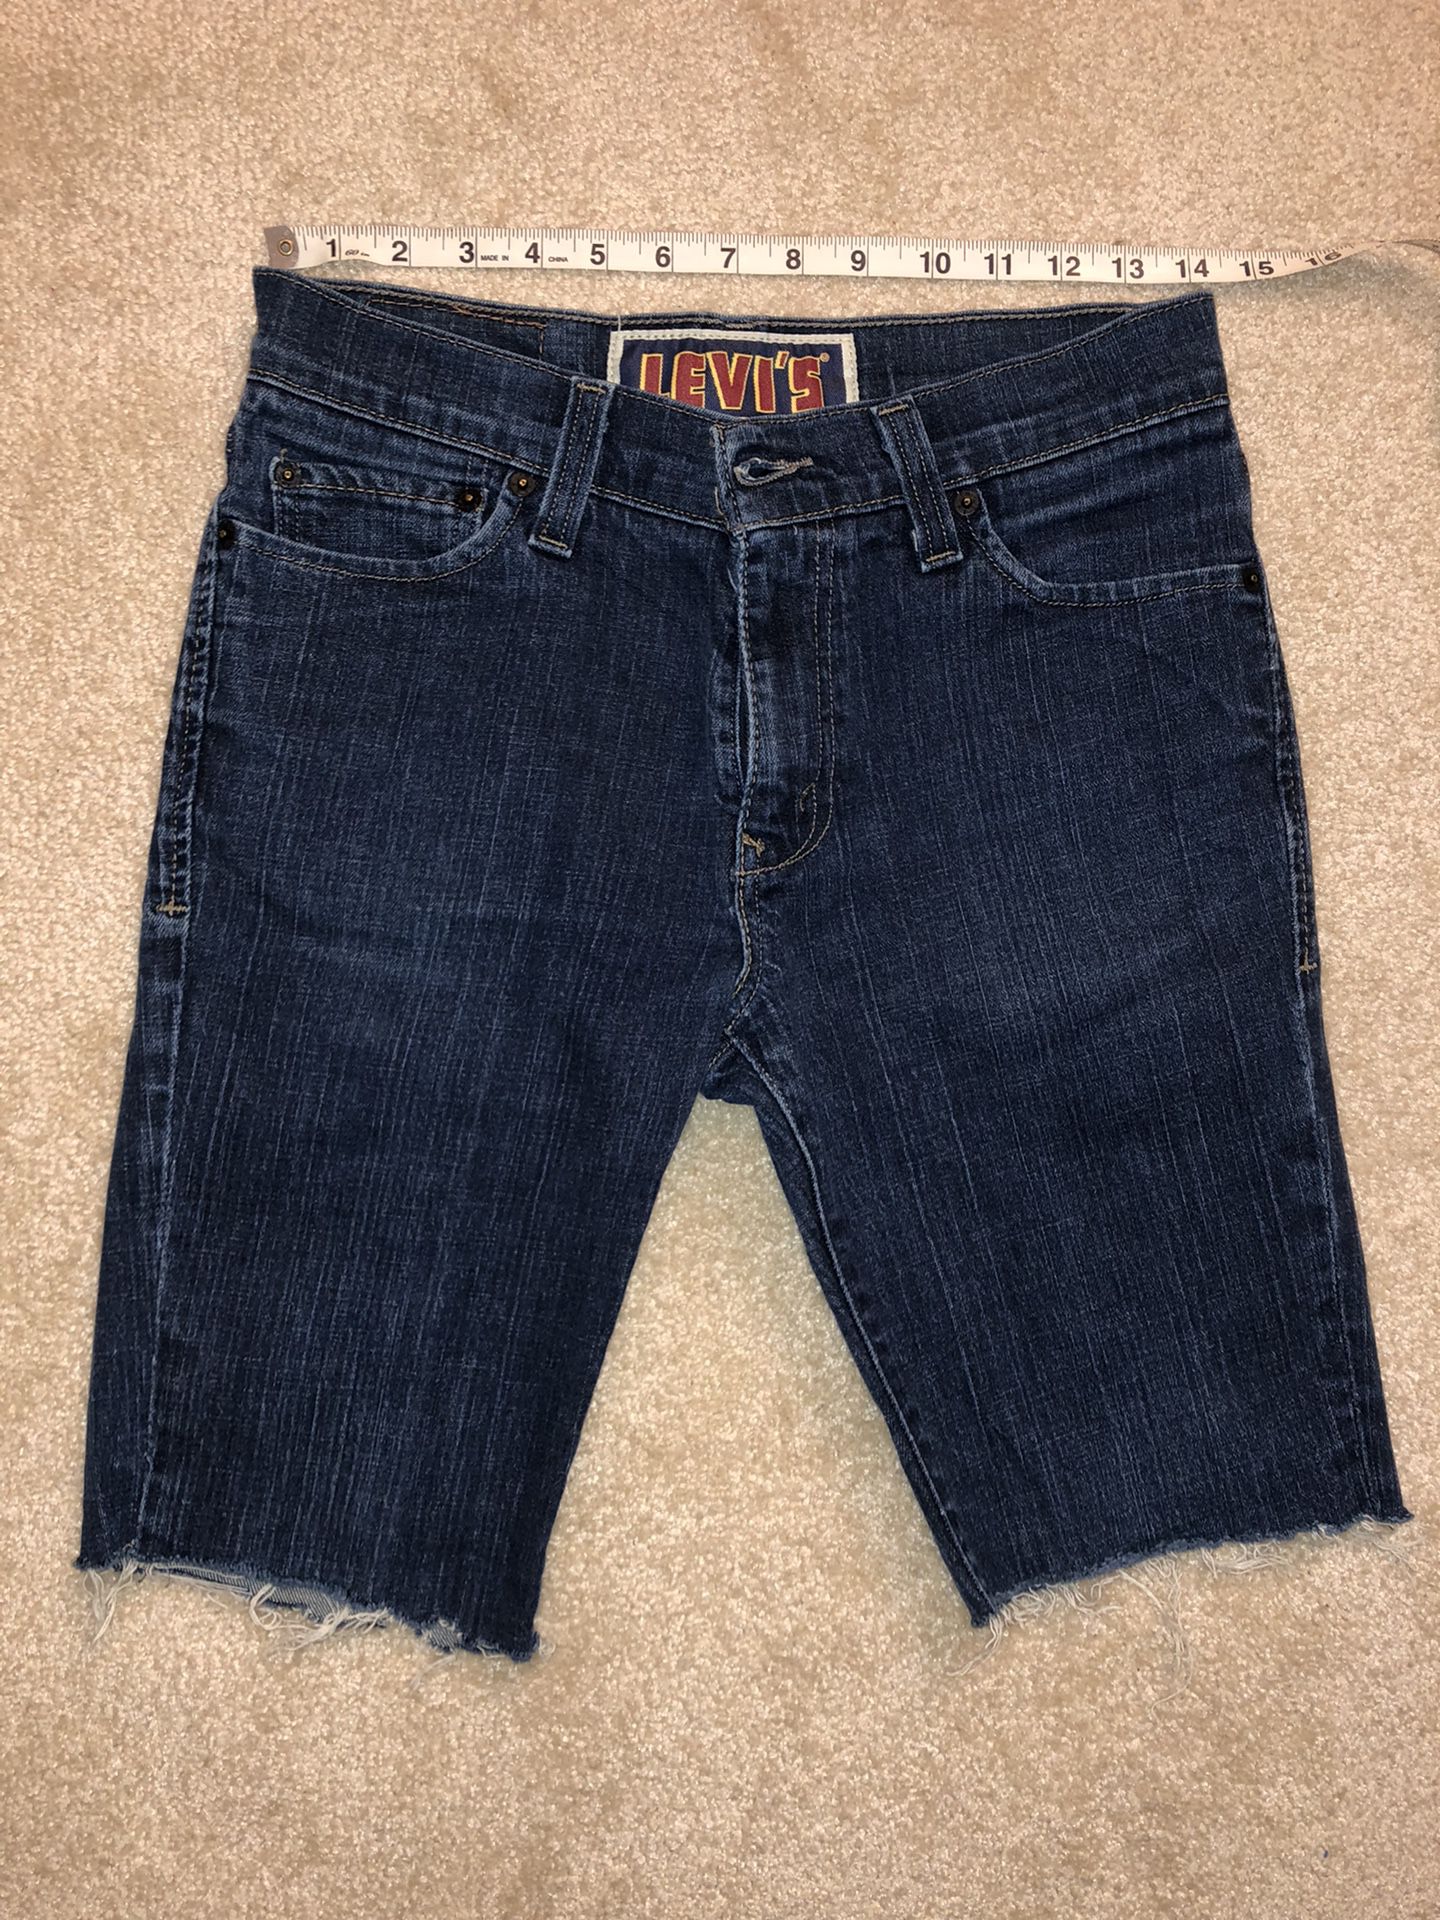 Levi’s 510 Vintage Men’s Cutoff Shorts Size 32